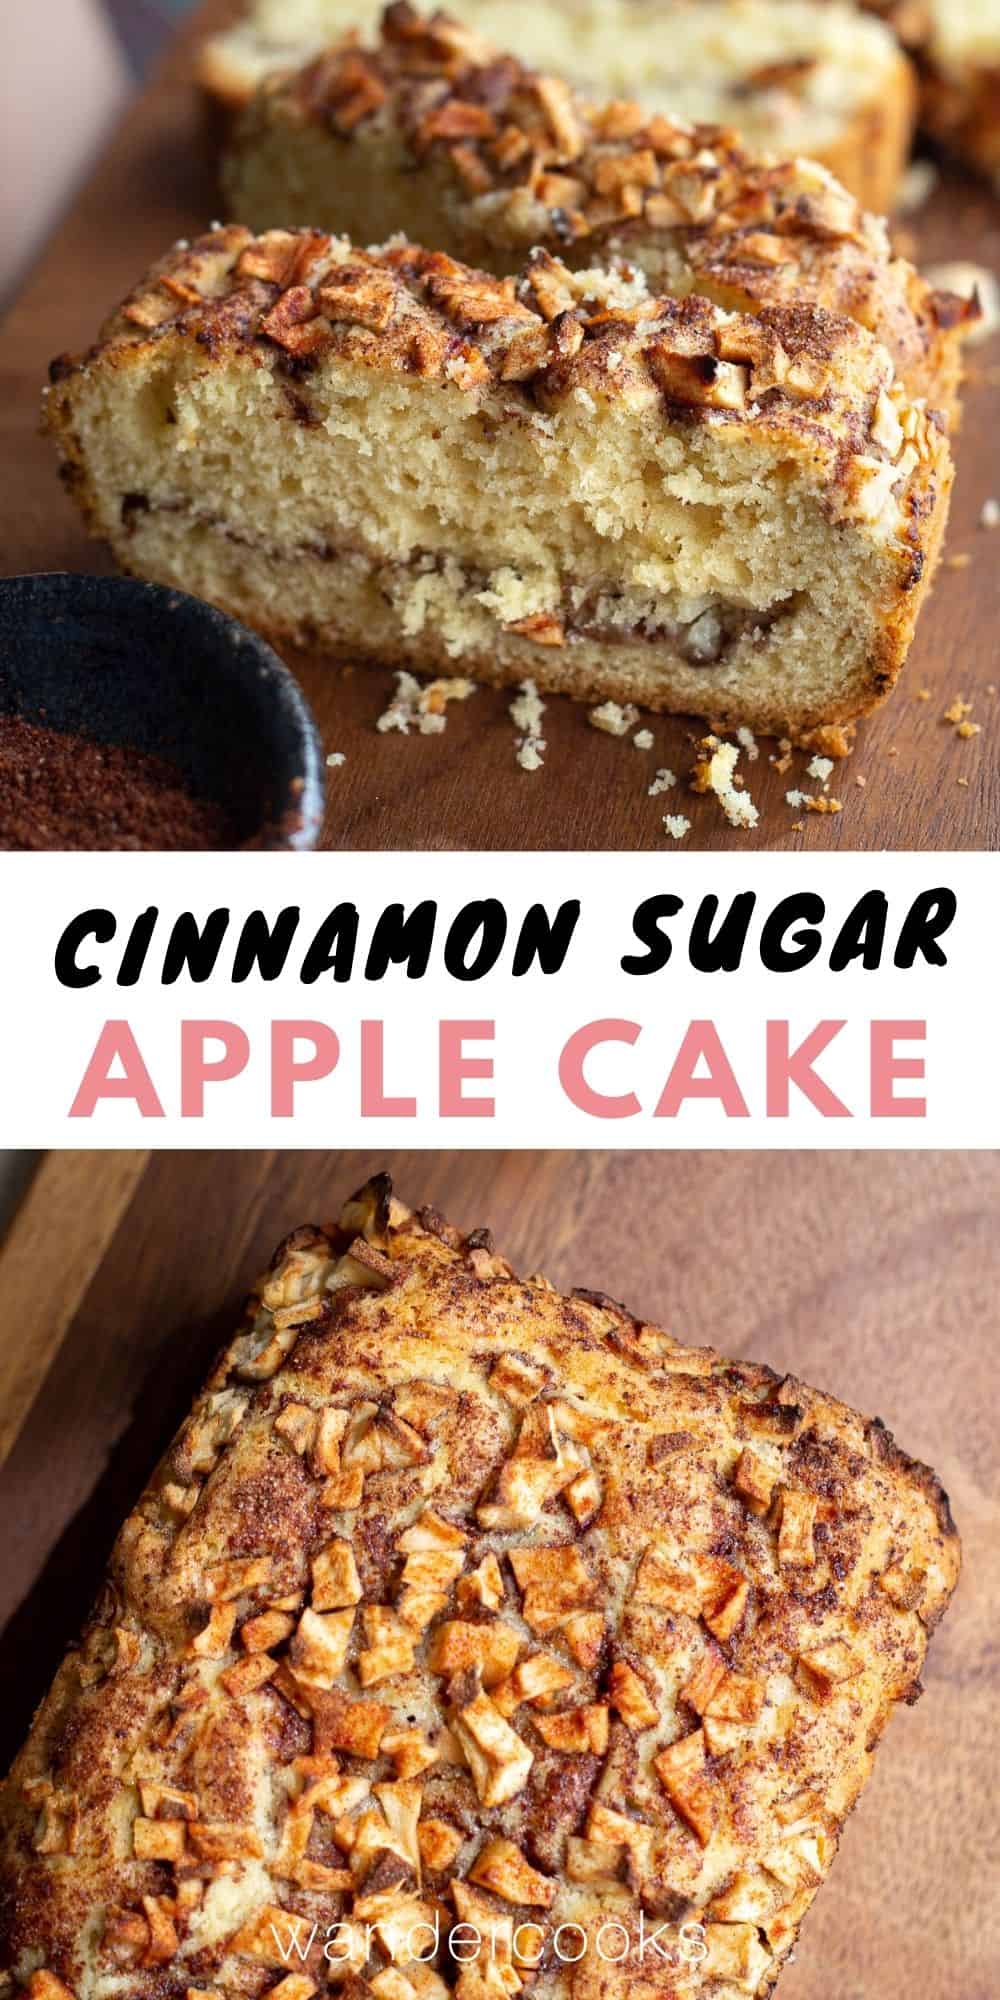 Easy Apple Cake with Cinnamon